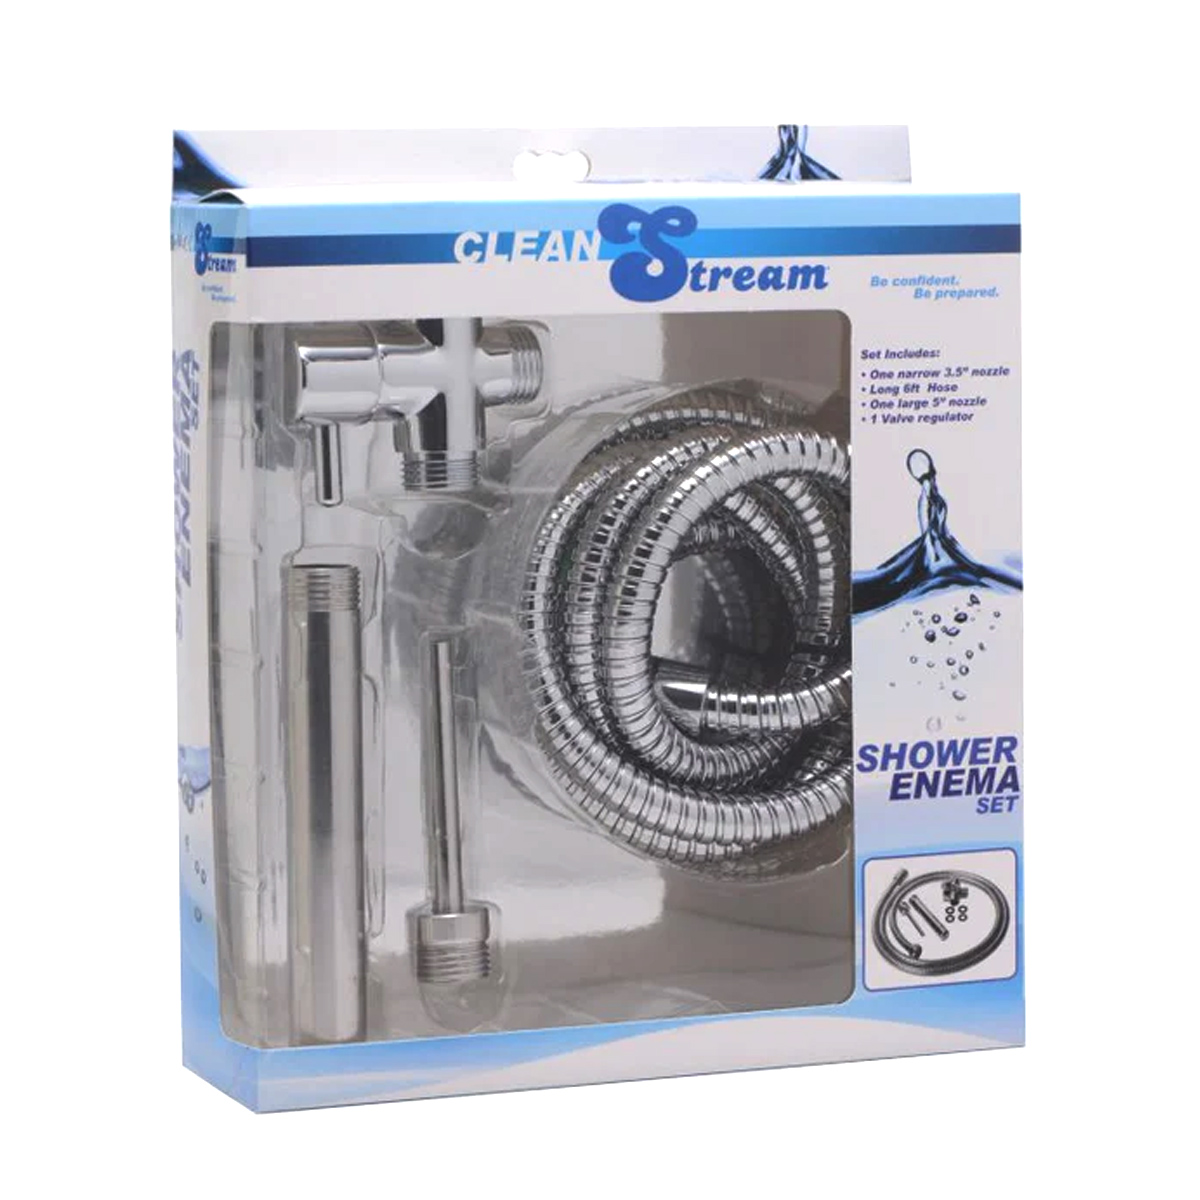 CleanStream-Shower-Enema-System-OPR-1070052-2